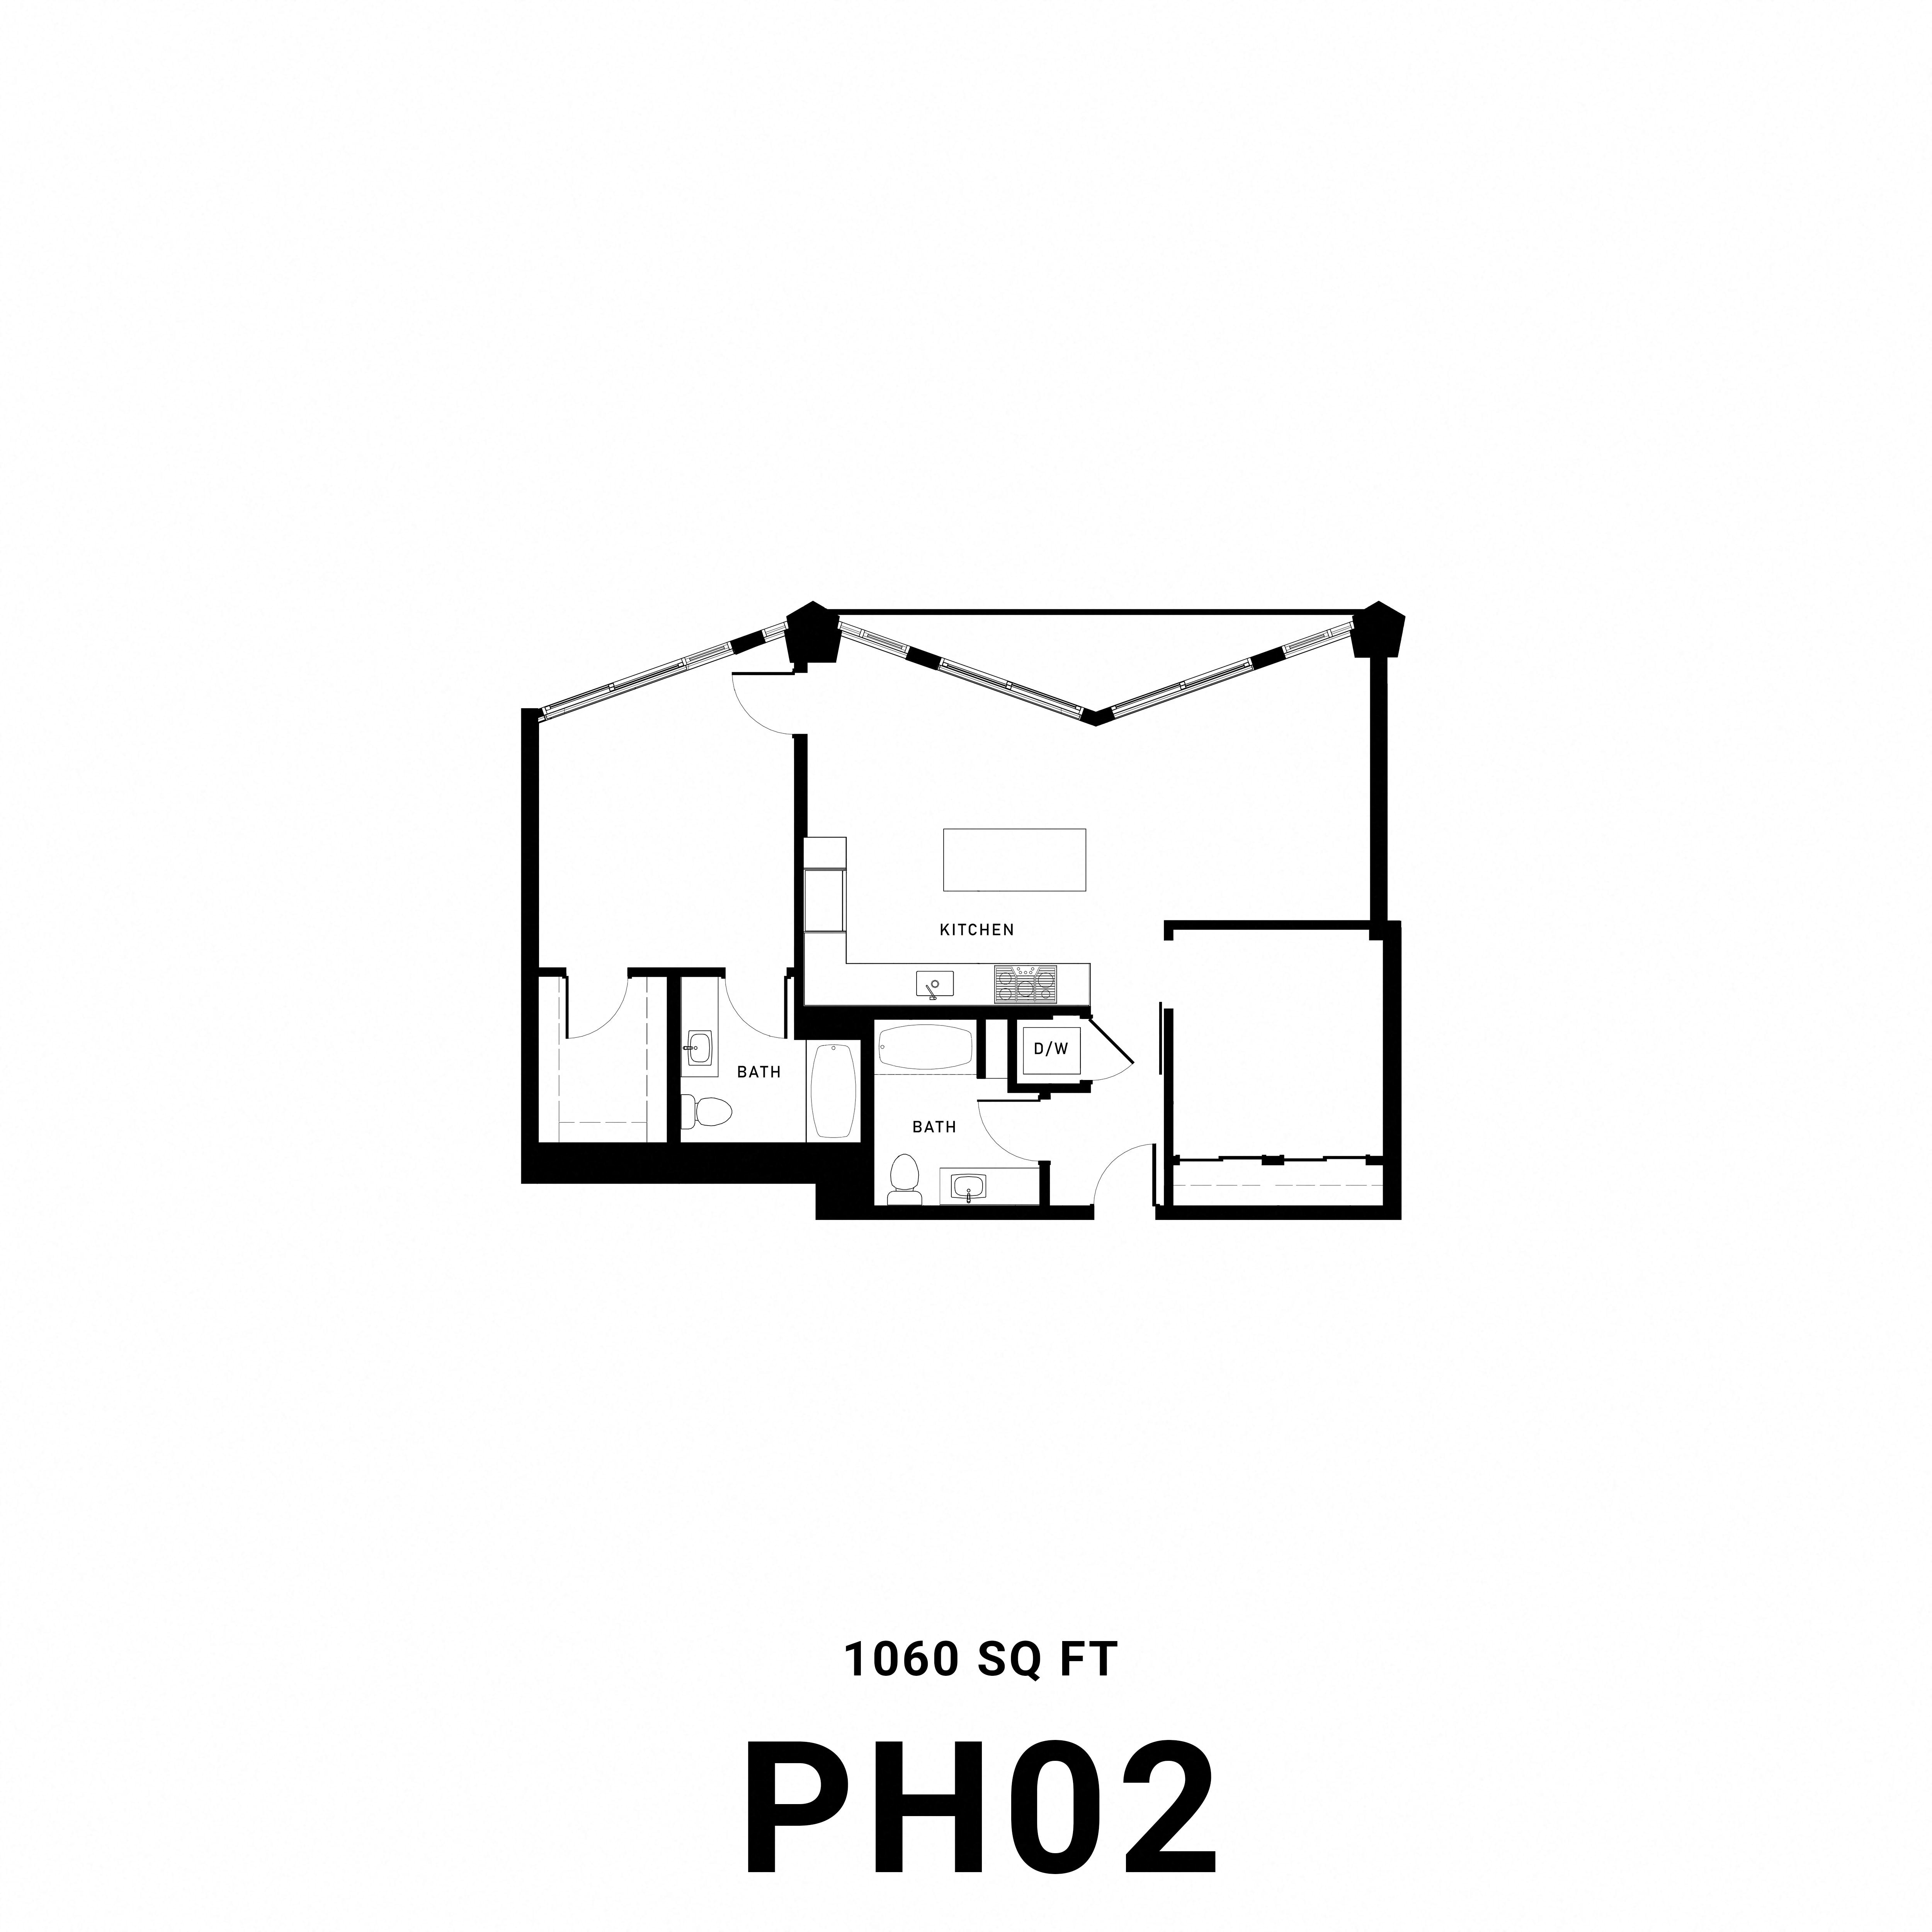 Floorplan PH02